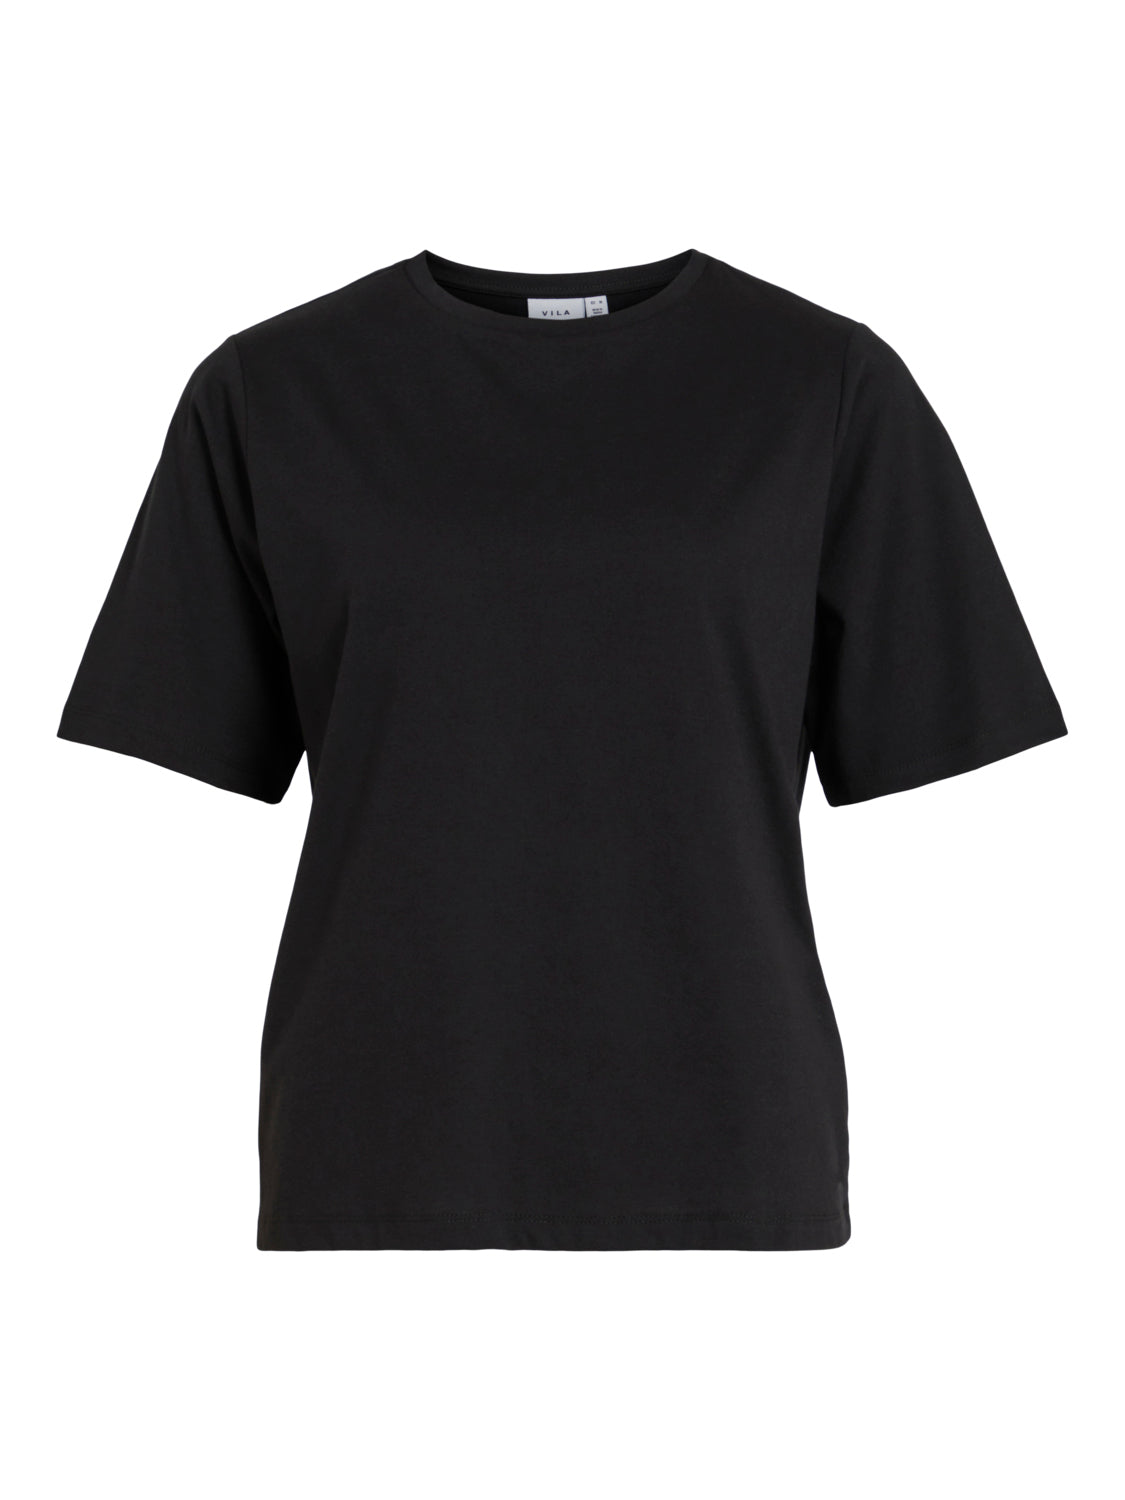 VIDREAMERS T-Shirt - Black